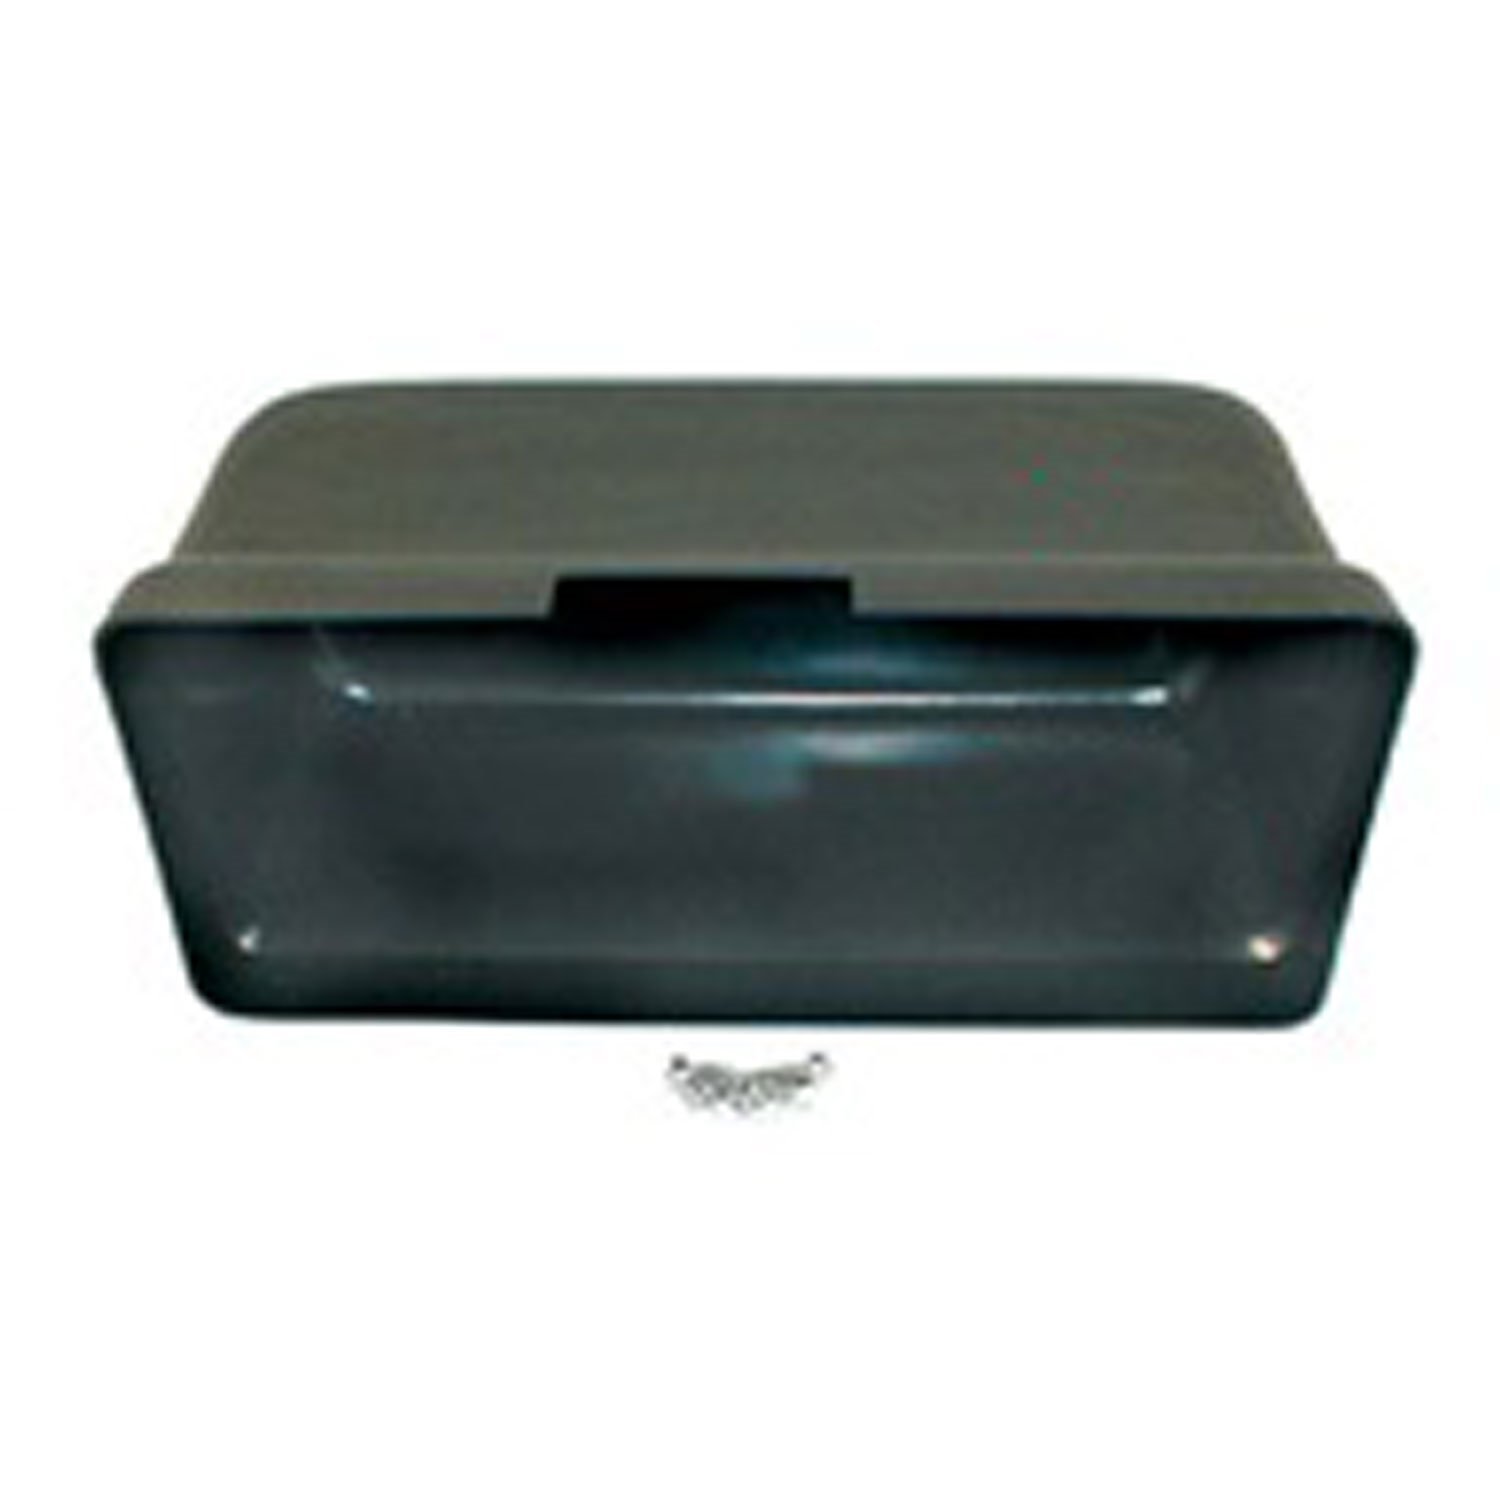 plastic replacement glove box insert from Omix-ADA, Fits 55-71 Jeep CJ5 and CJ6